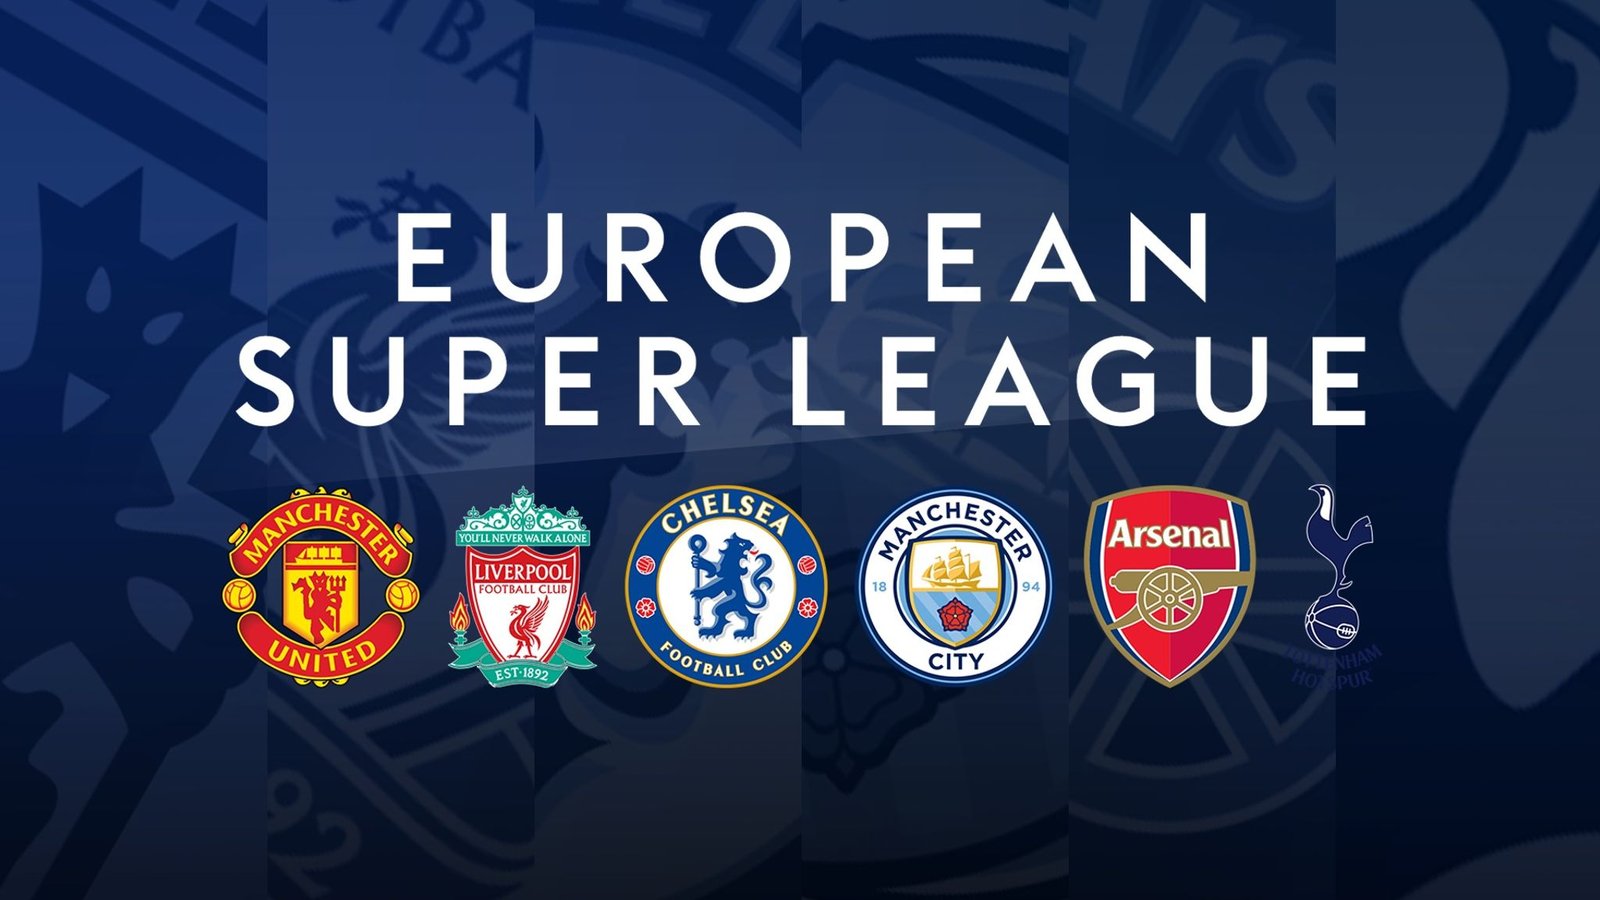 The European Super League has disintegrated